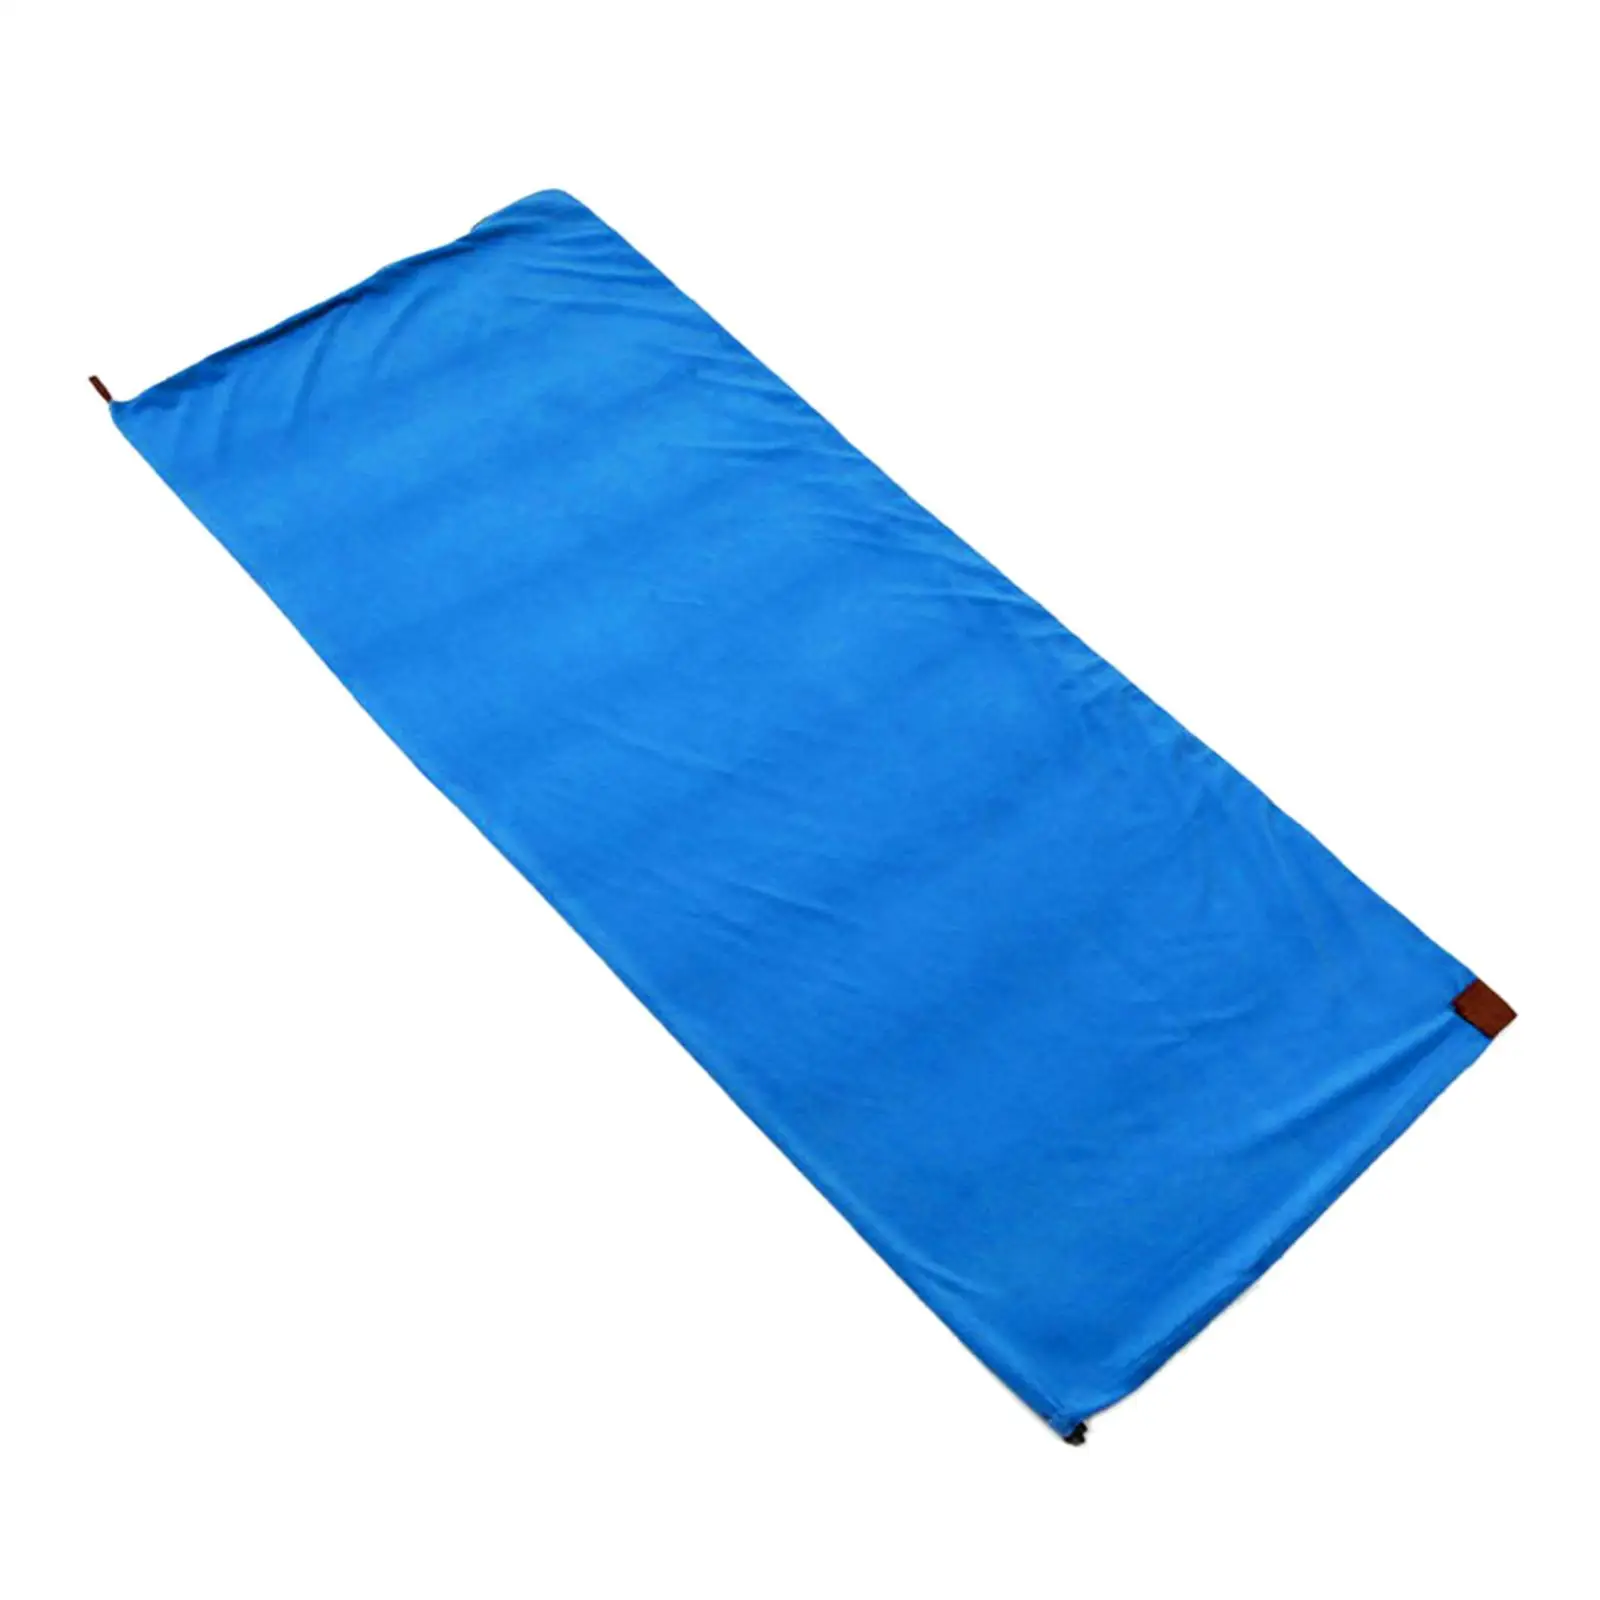 Soft Fleece Sleeping Bag Liner Outdoor Camping Blanket for Cold Weather Adult Jogging